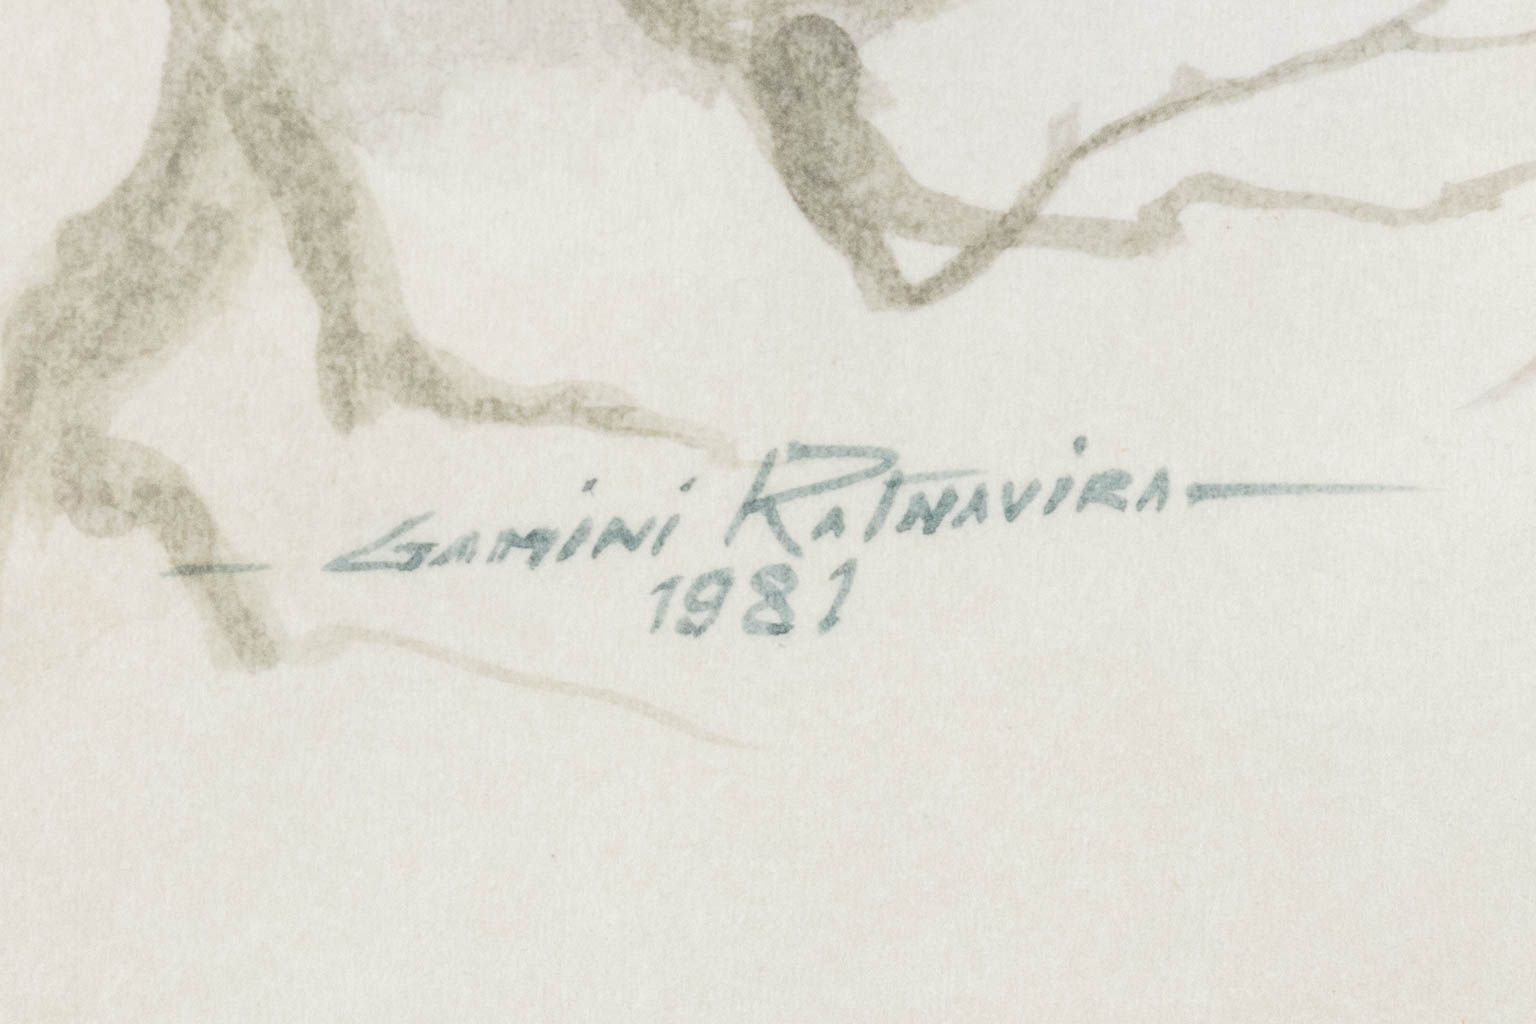 Gamini P. RATNAVIRA (1949) 